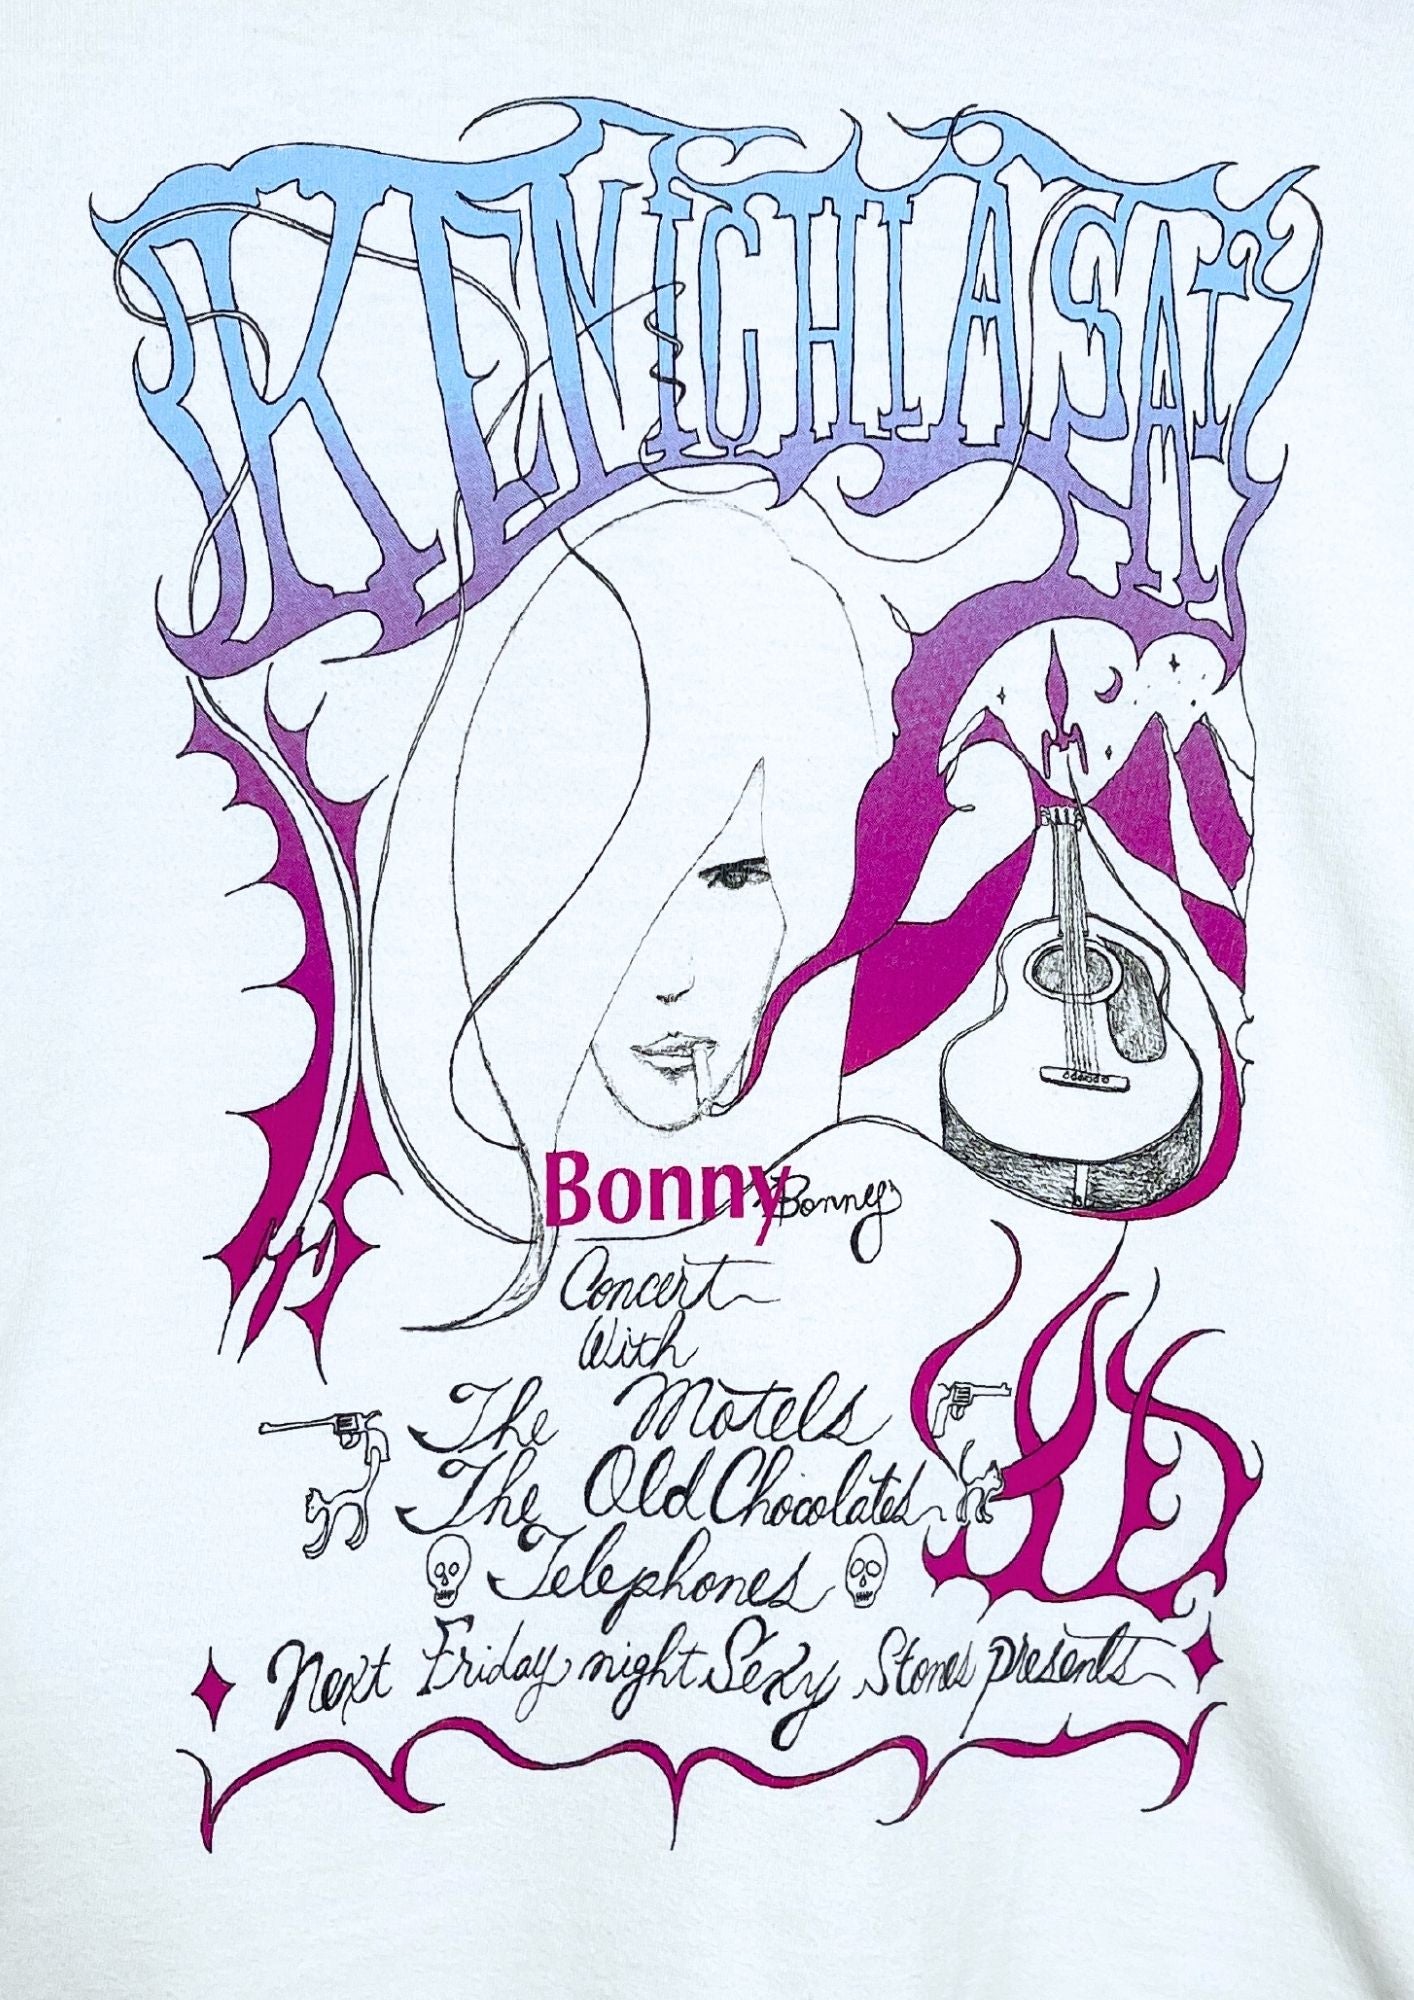 2005 KENICHI ASAI 'Bonny Bonny' Japanese Rock Band T-shirt